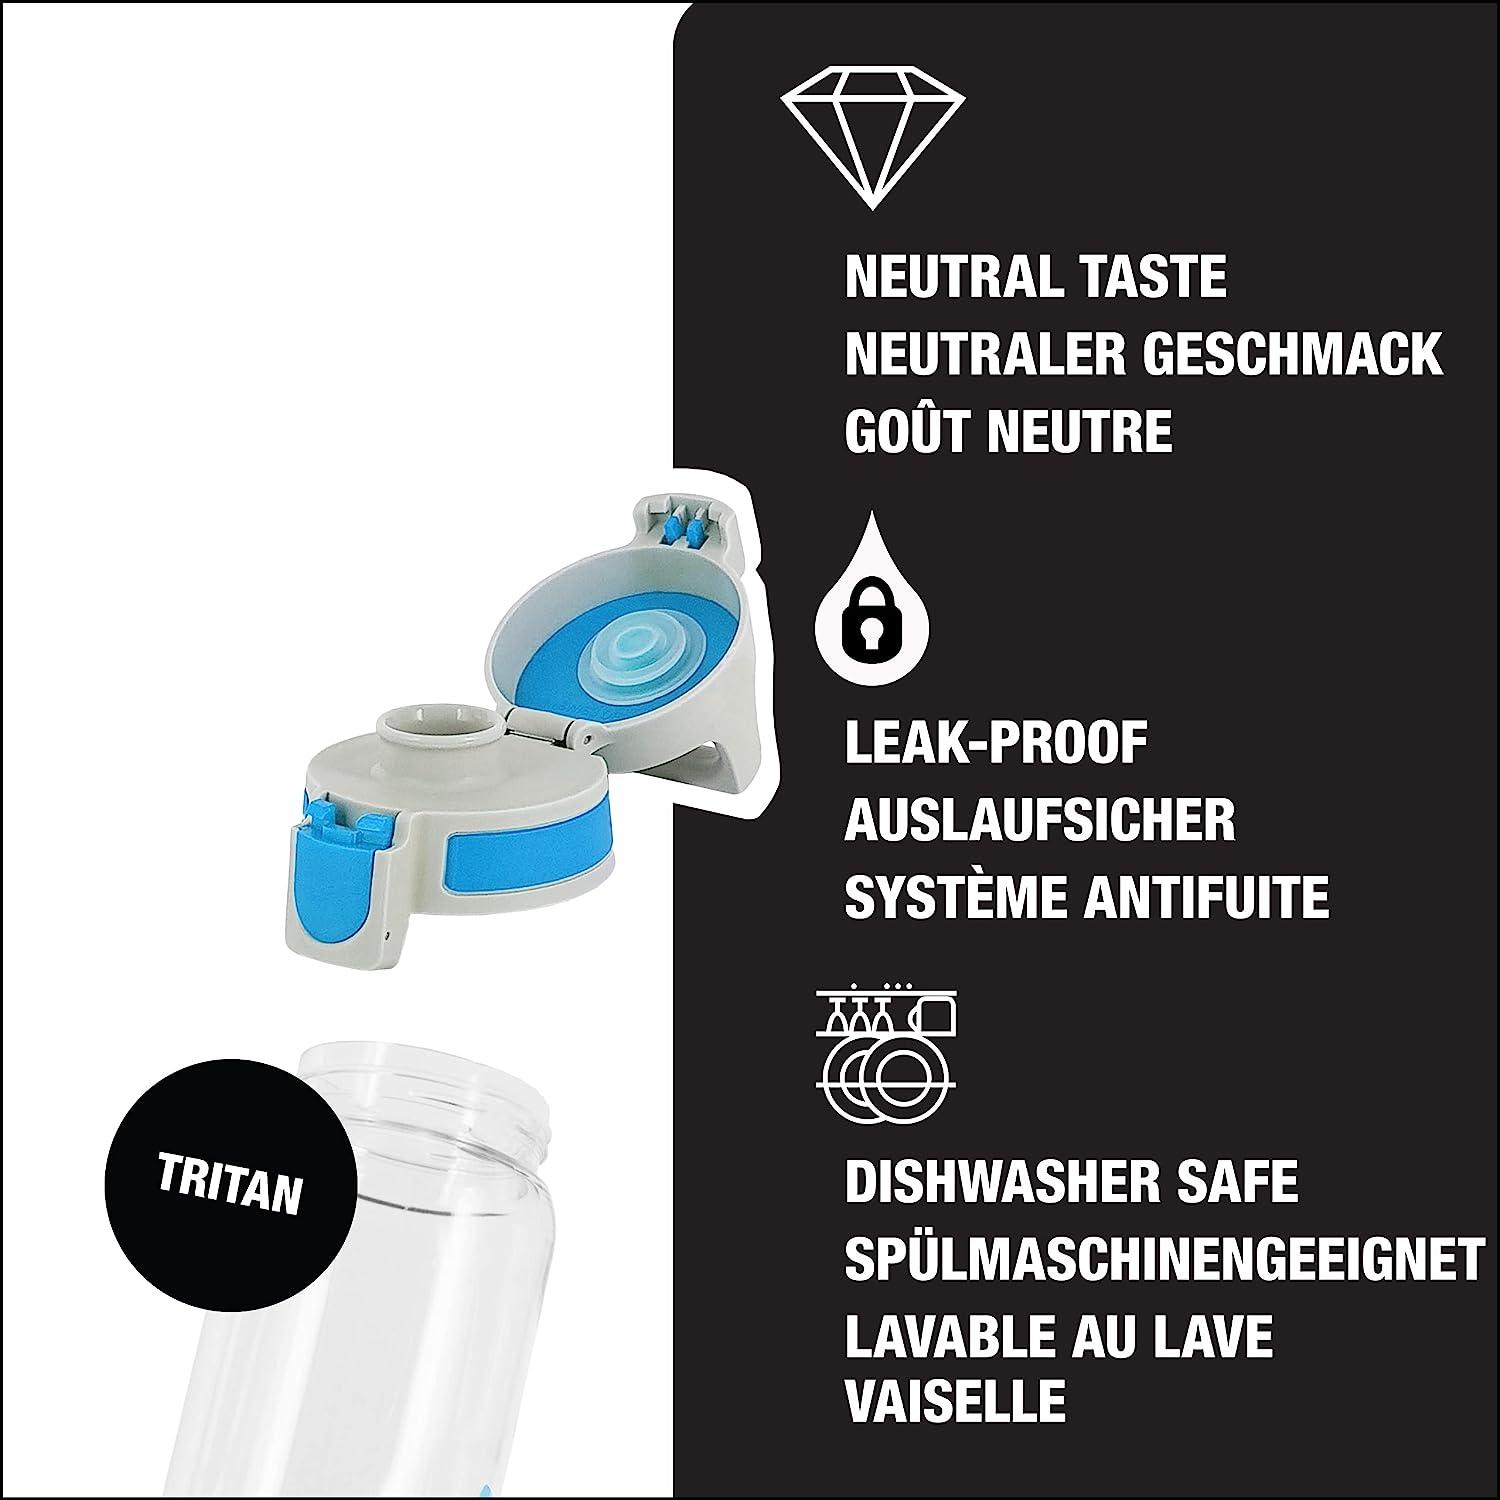 Sigg - Tritan Water Bottle - Total Clear One MyPlanet Aqua - Suitable for Carbonated Beverages - Dishwasher Safe - Leakproof - L